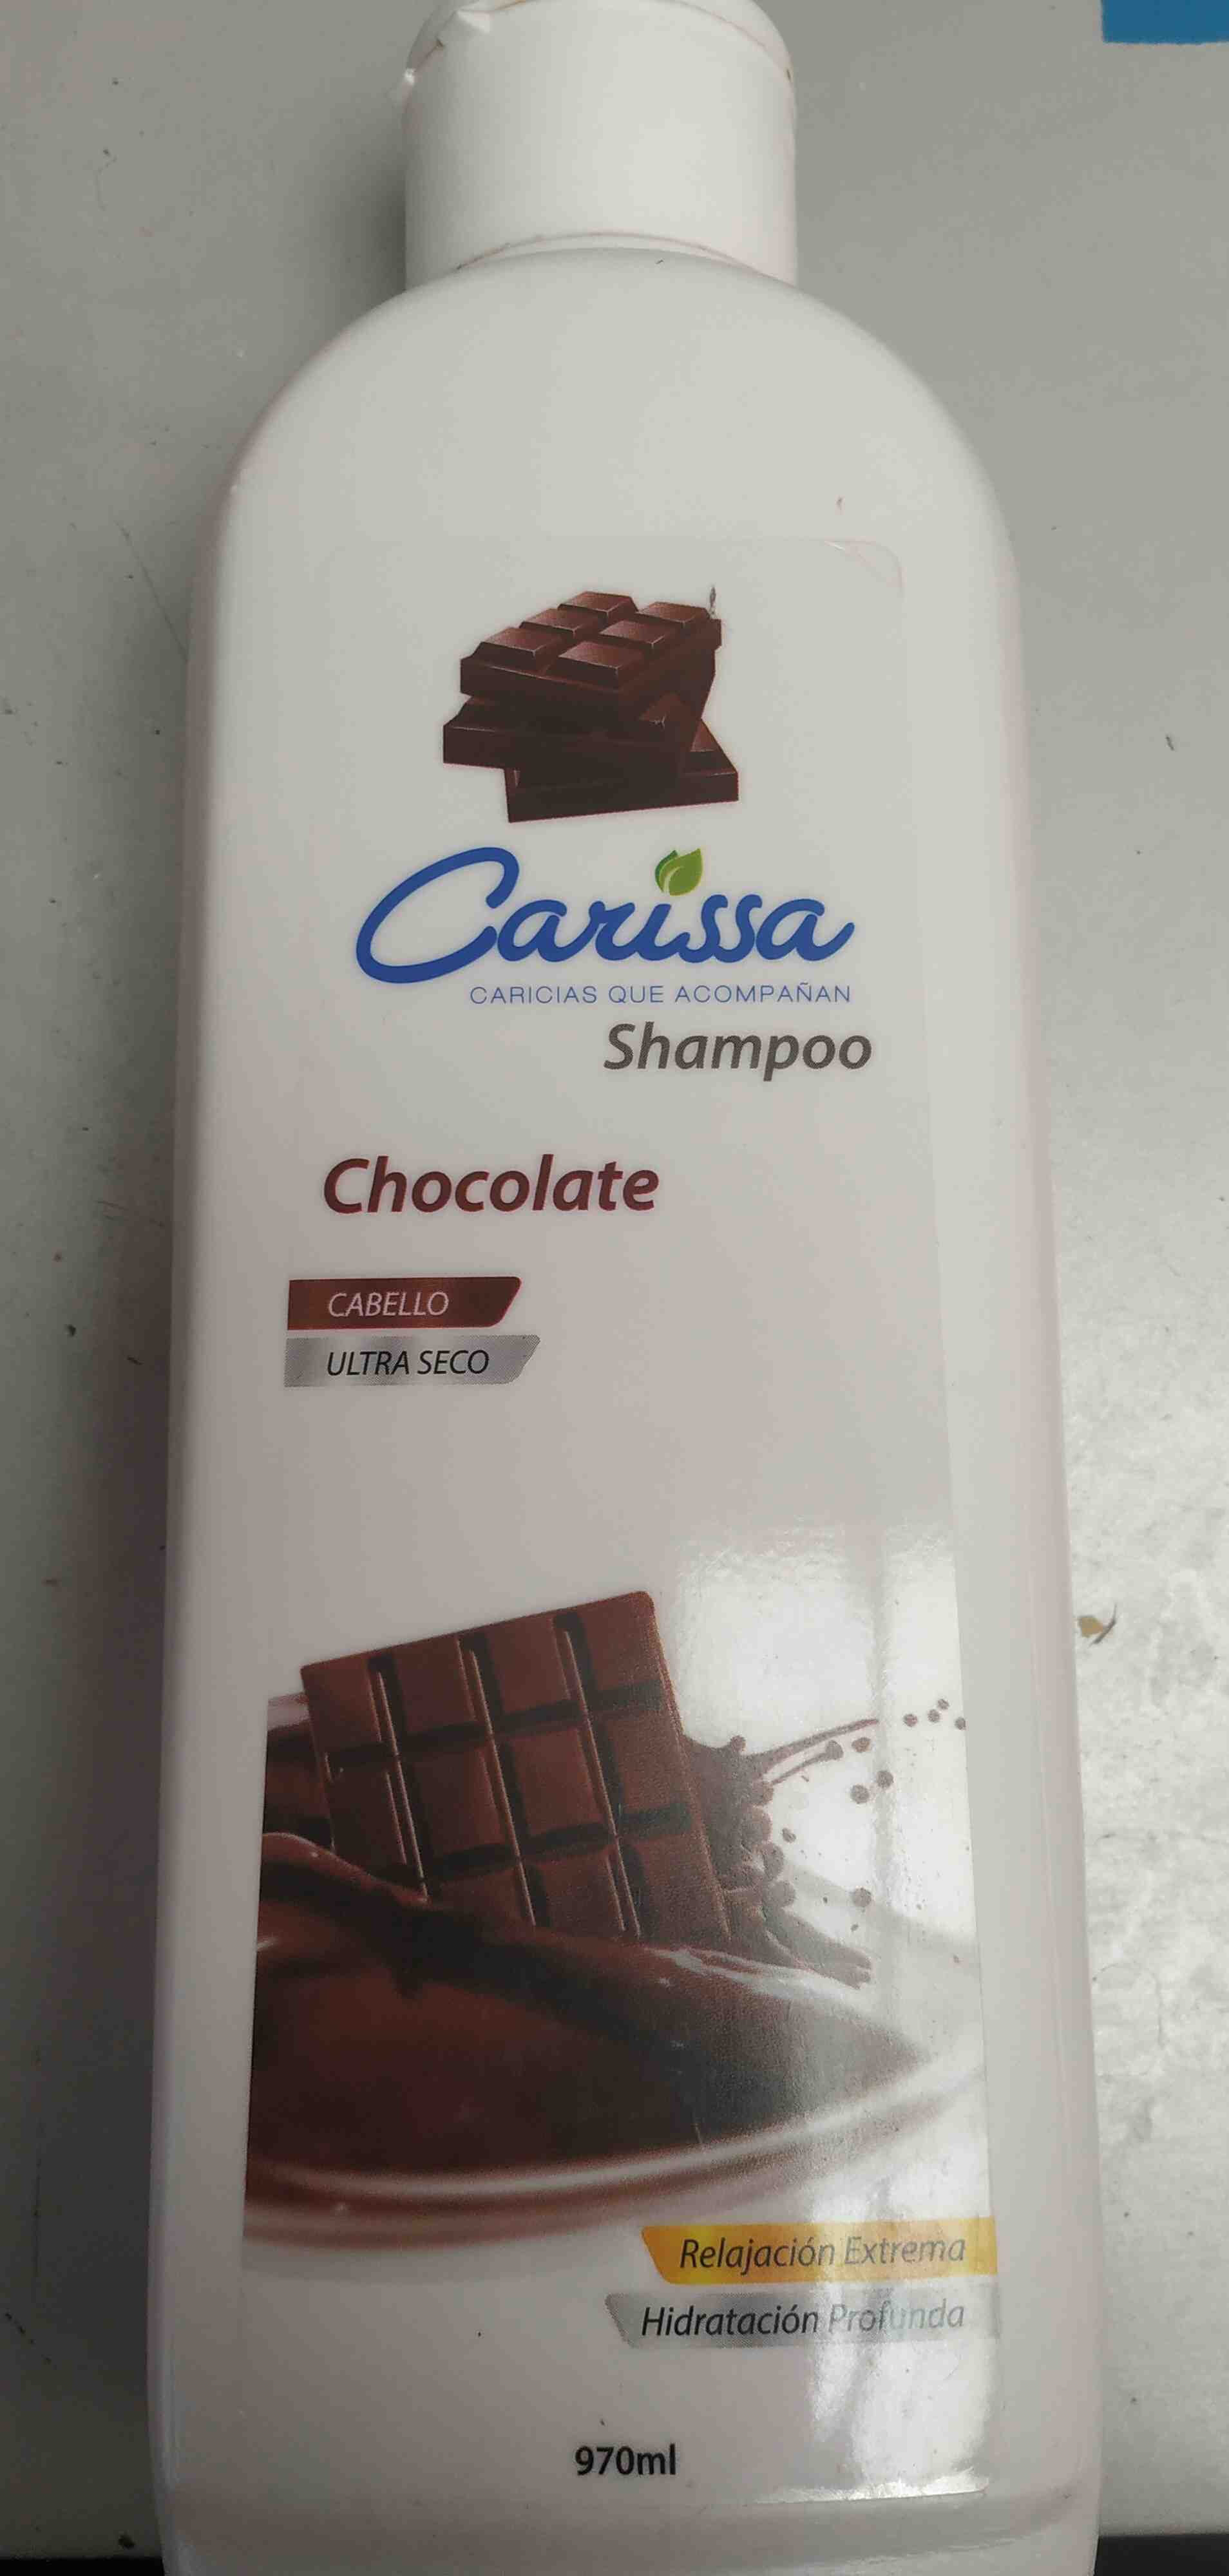 Clarissa shampoo - Produkt - es